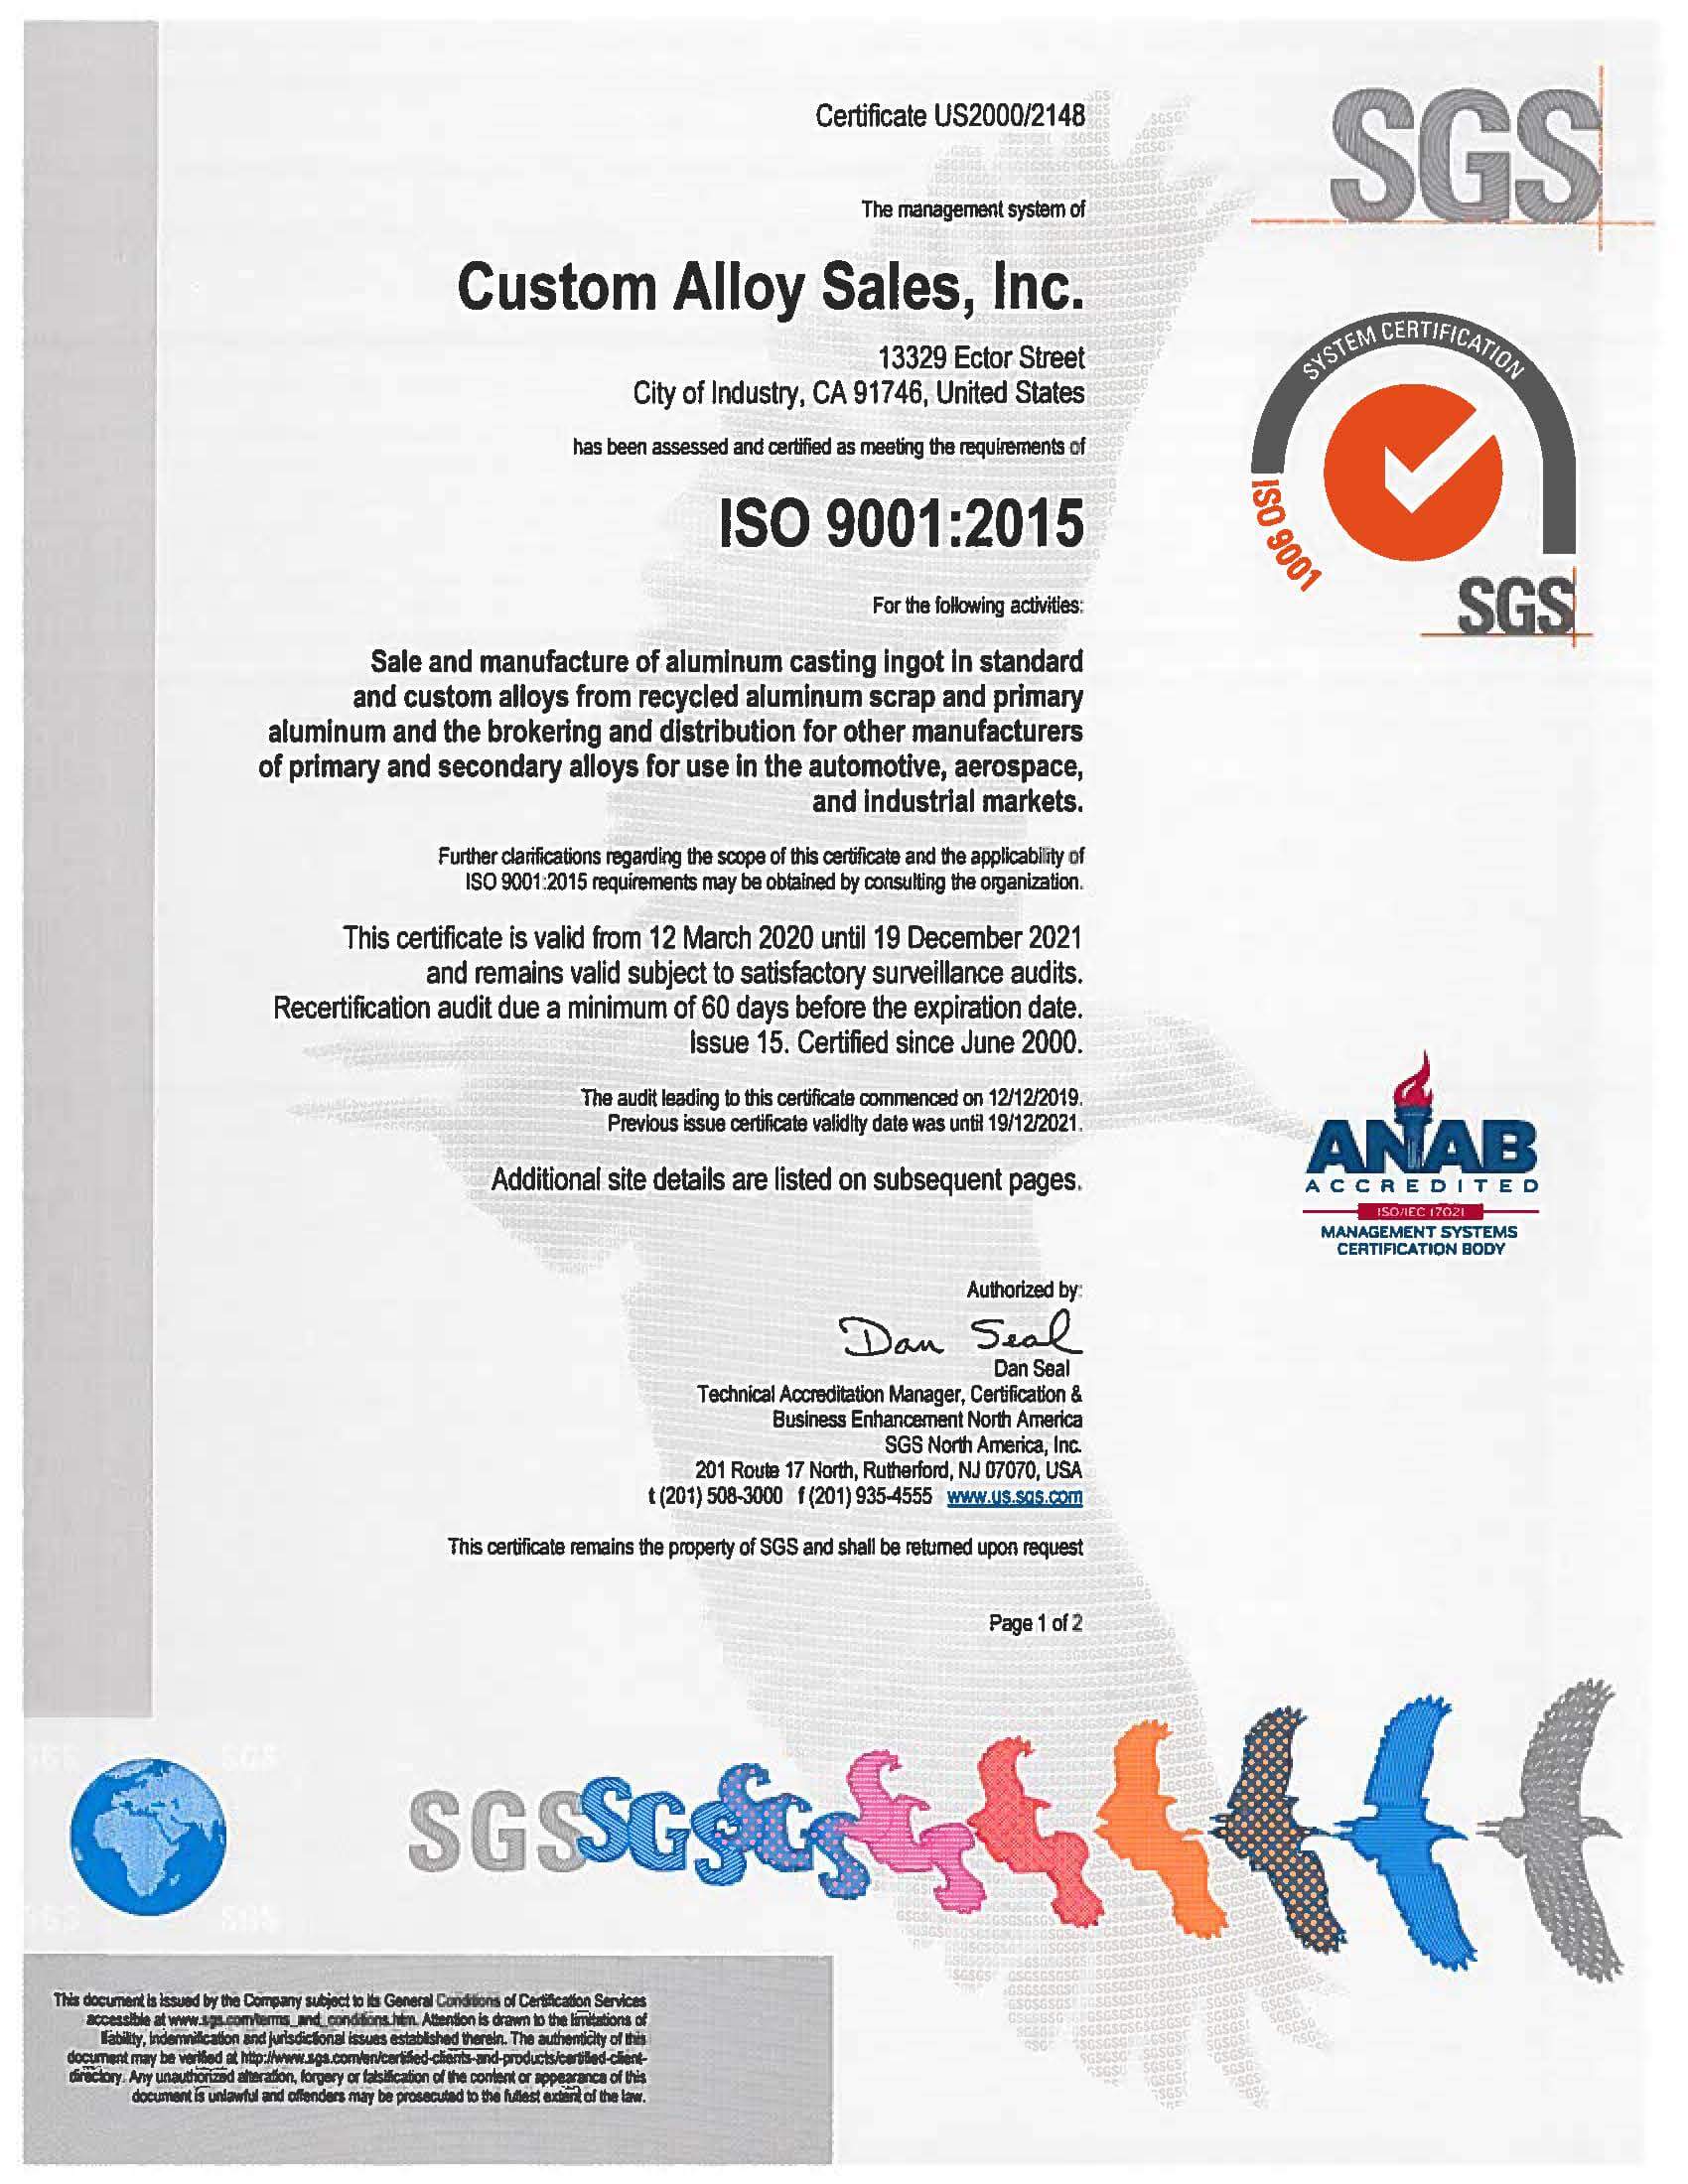 Custom Alloy Sales Inc ISO Certificate 1